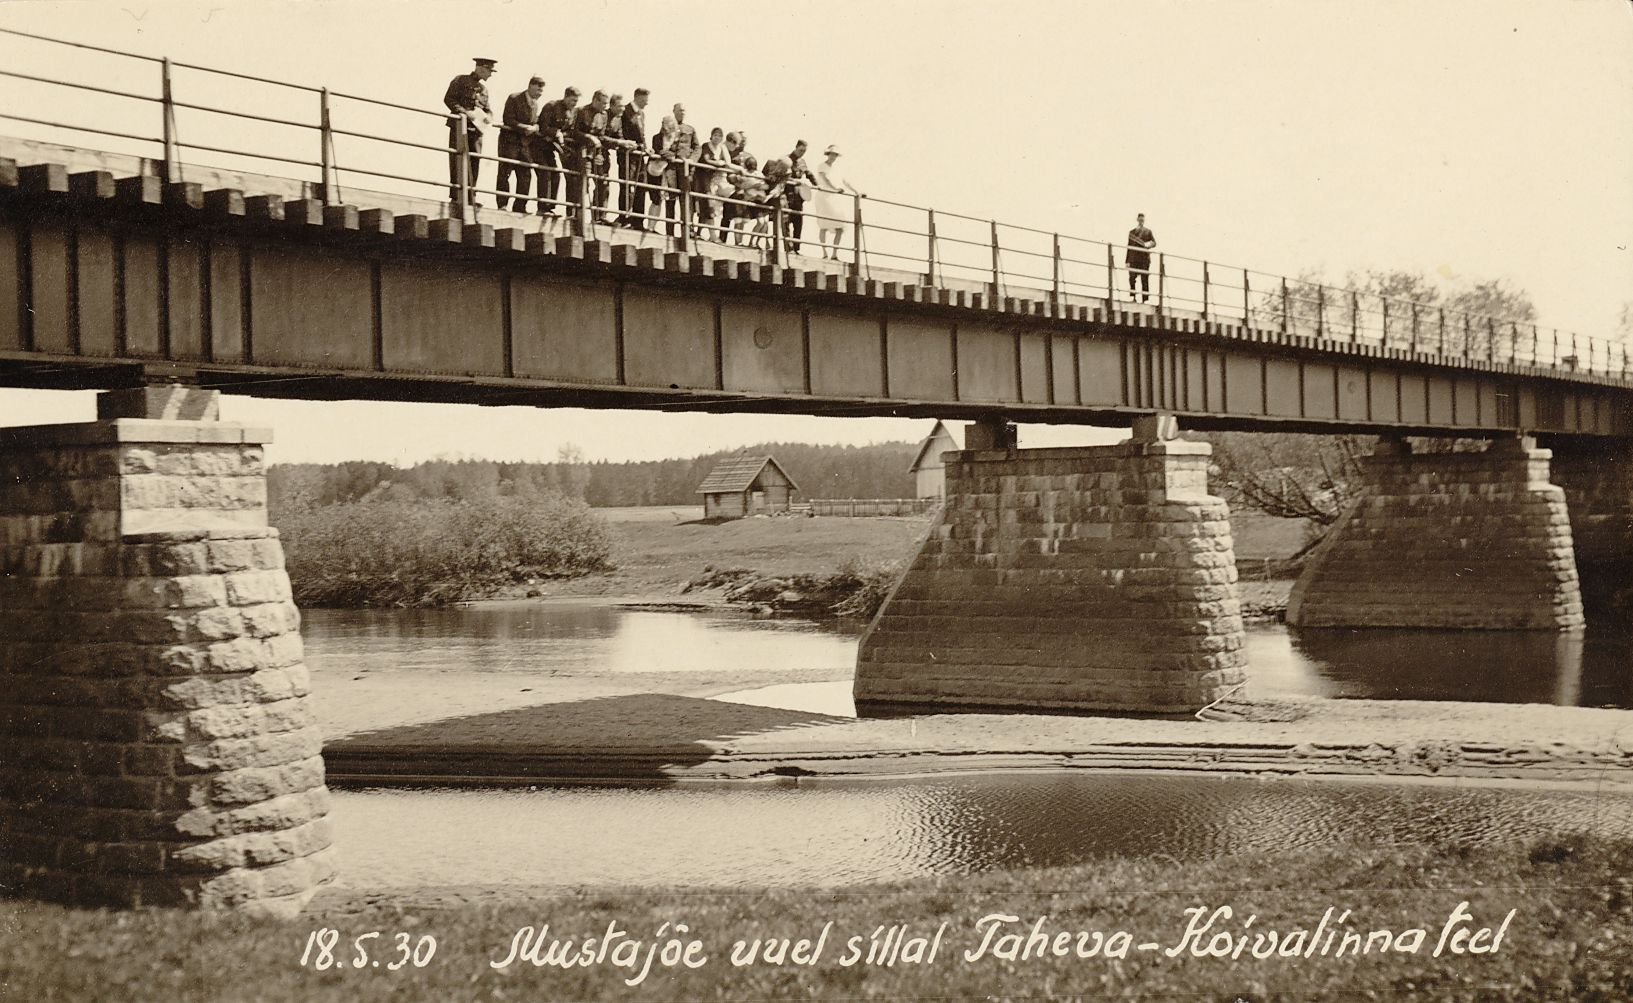 On the new bridge of Mustjõe on the road to Taheva- Koivalinna